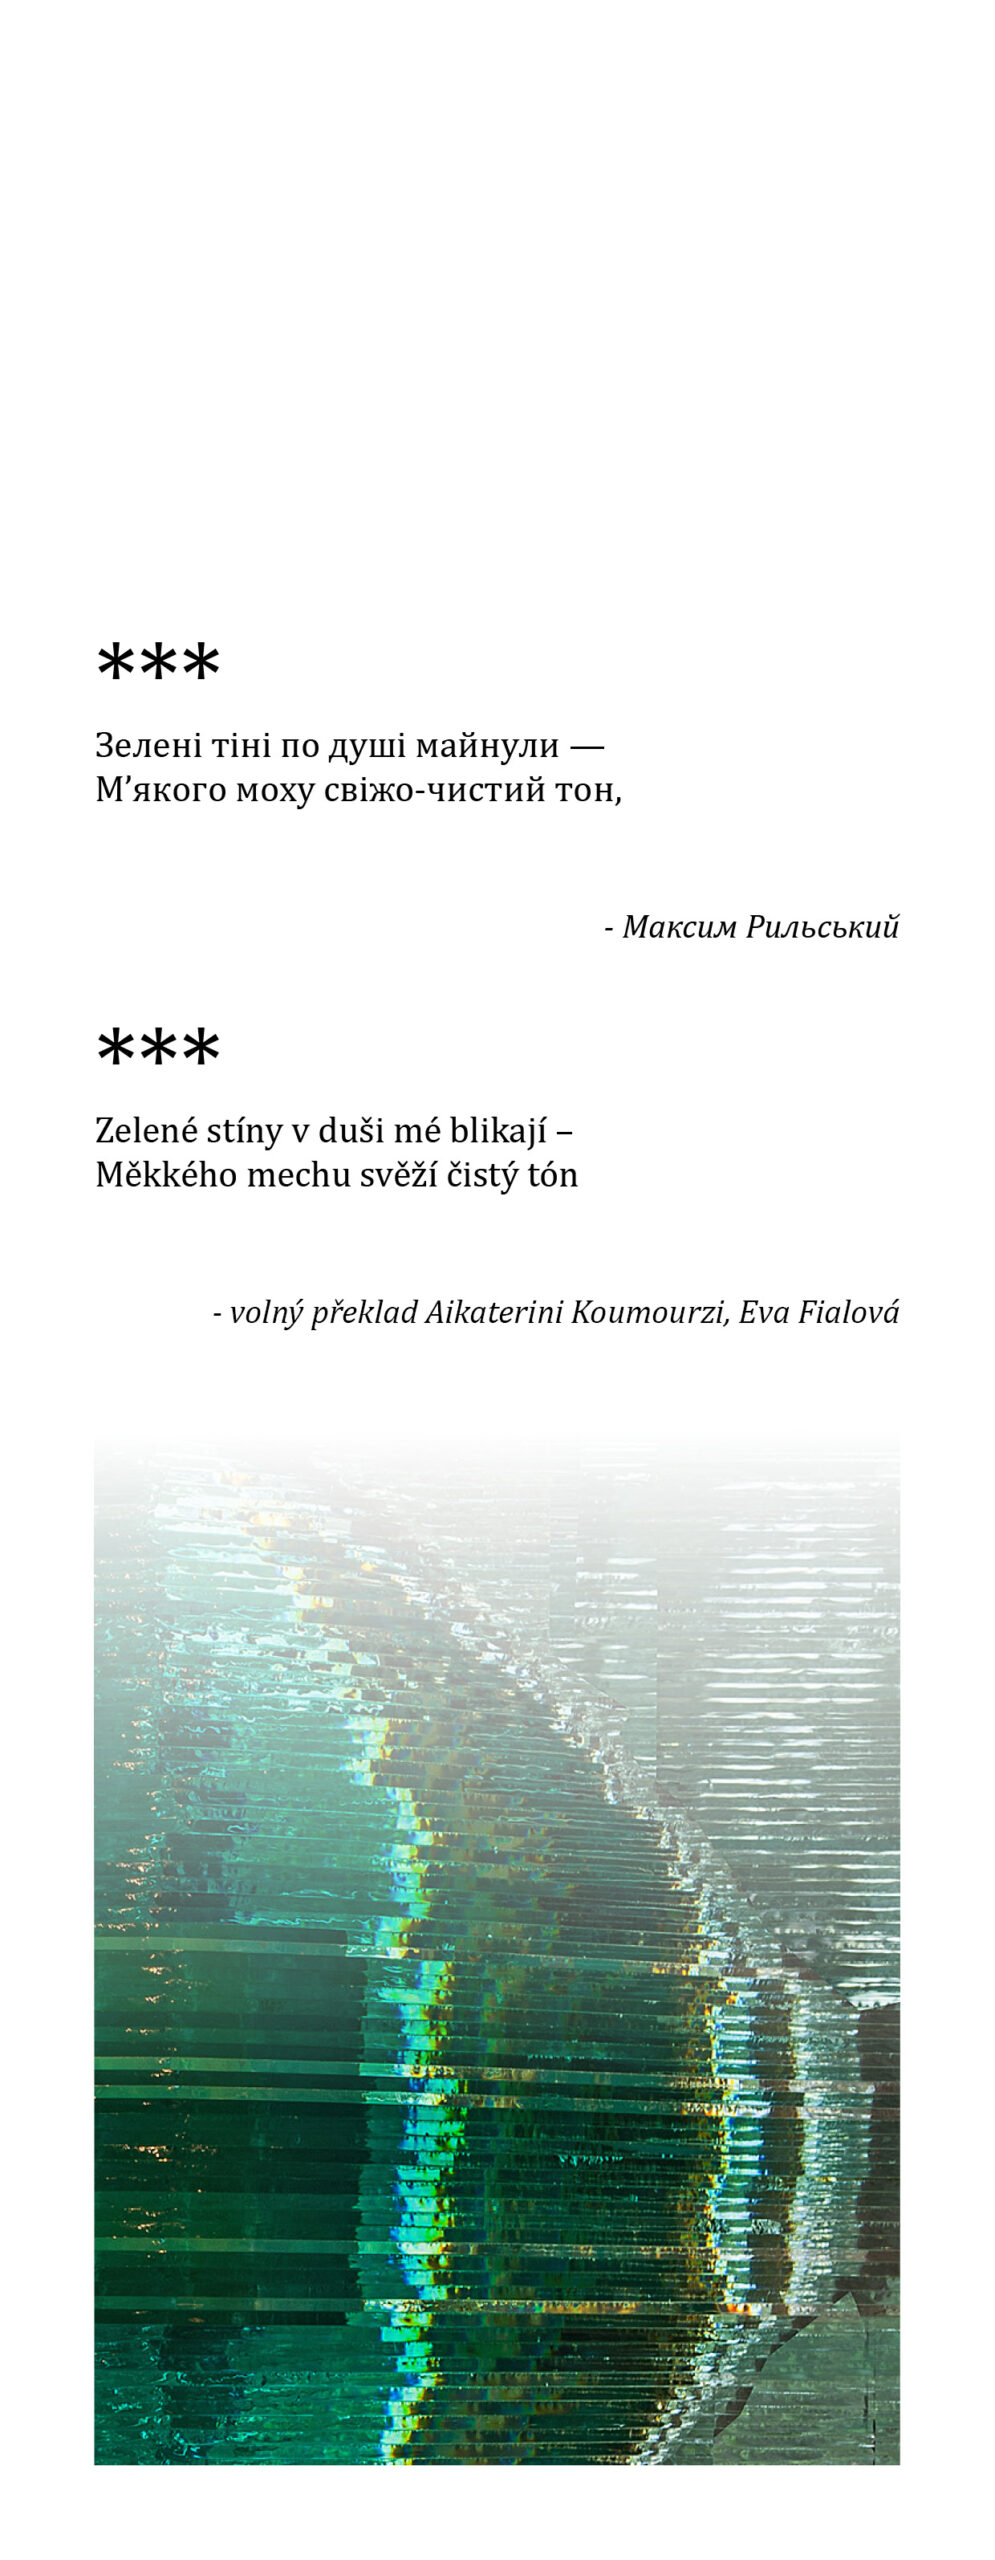 Poezie ve skle. Poetický průvodce expozicí Plejády skla a Via lucis. Básně